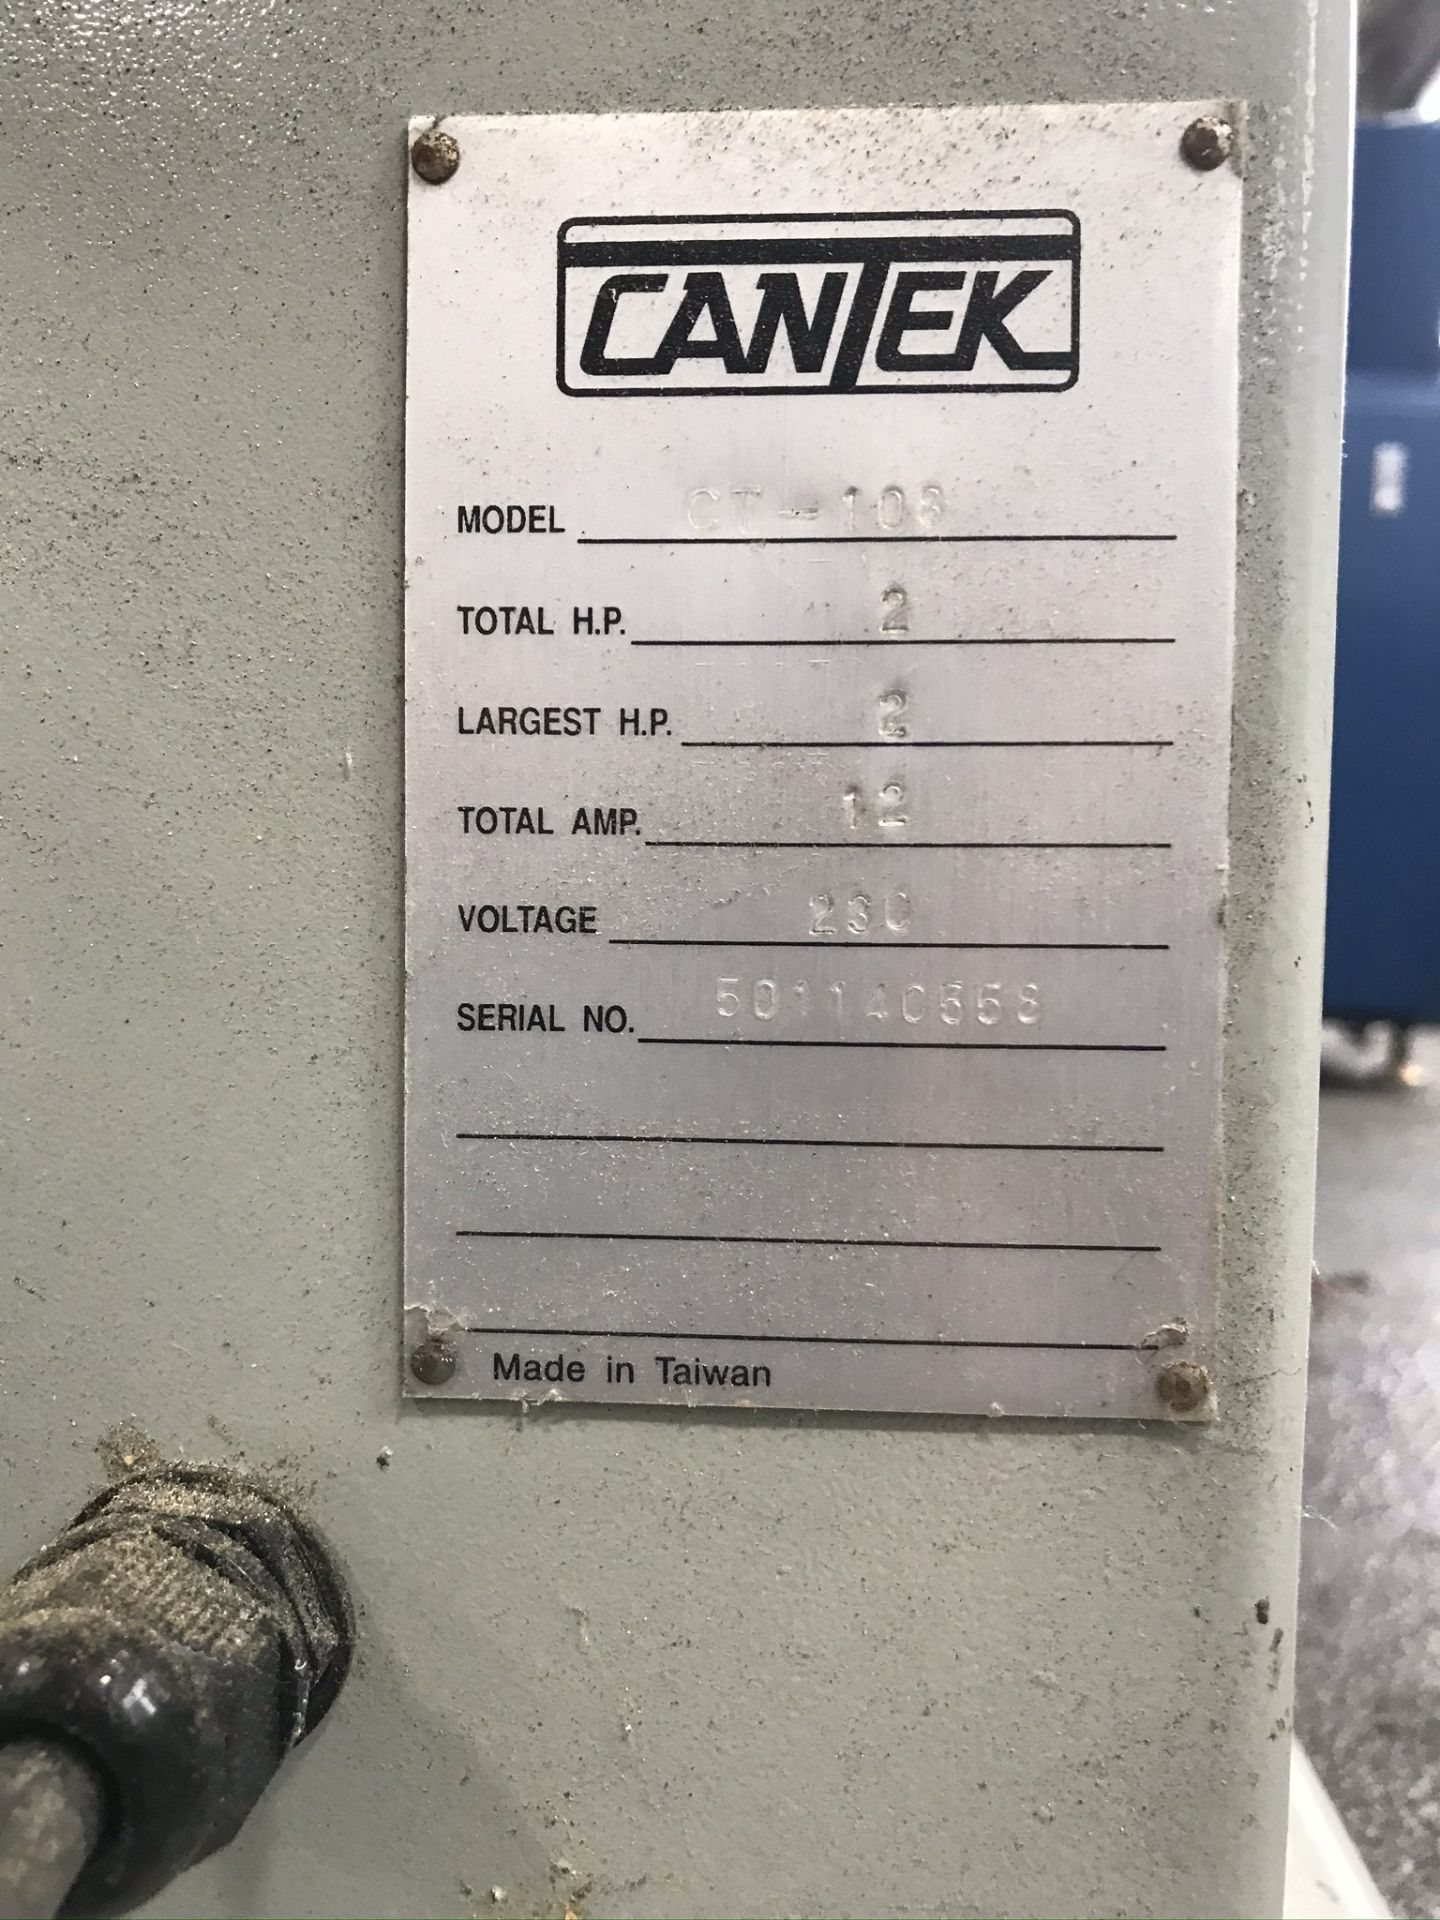 Cantek CT-108 Horizontal Edge Sander, 2 HP, Work light, 220 Volt, 3-Phase - Image 3 of 3